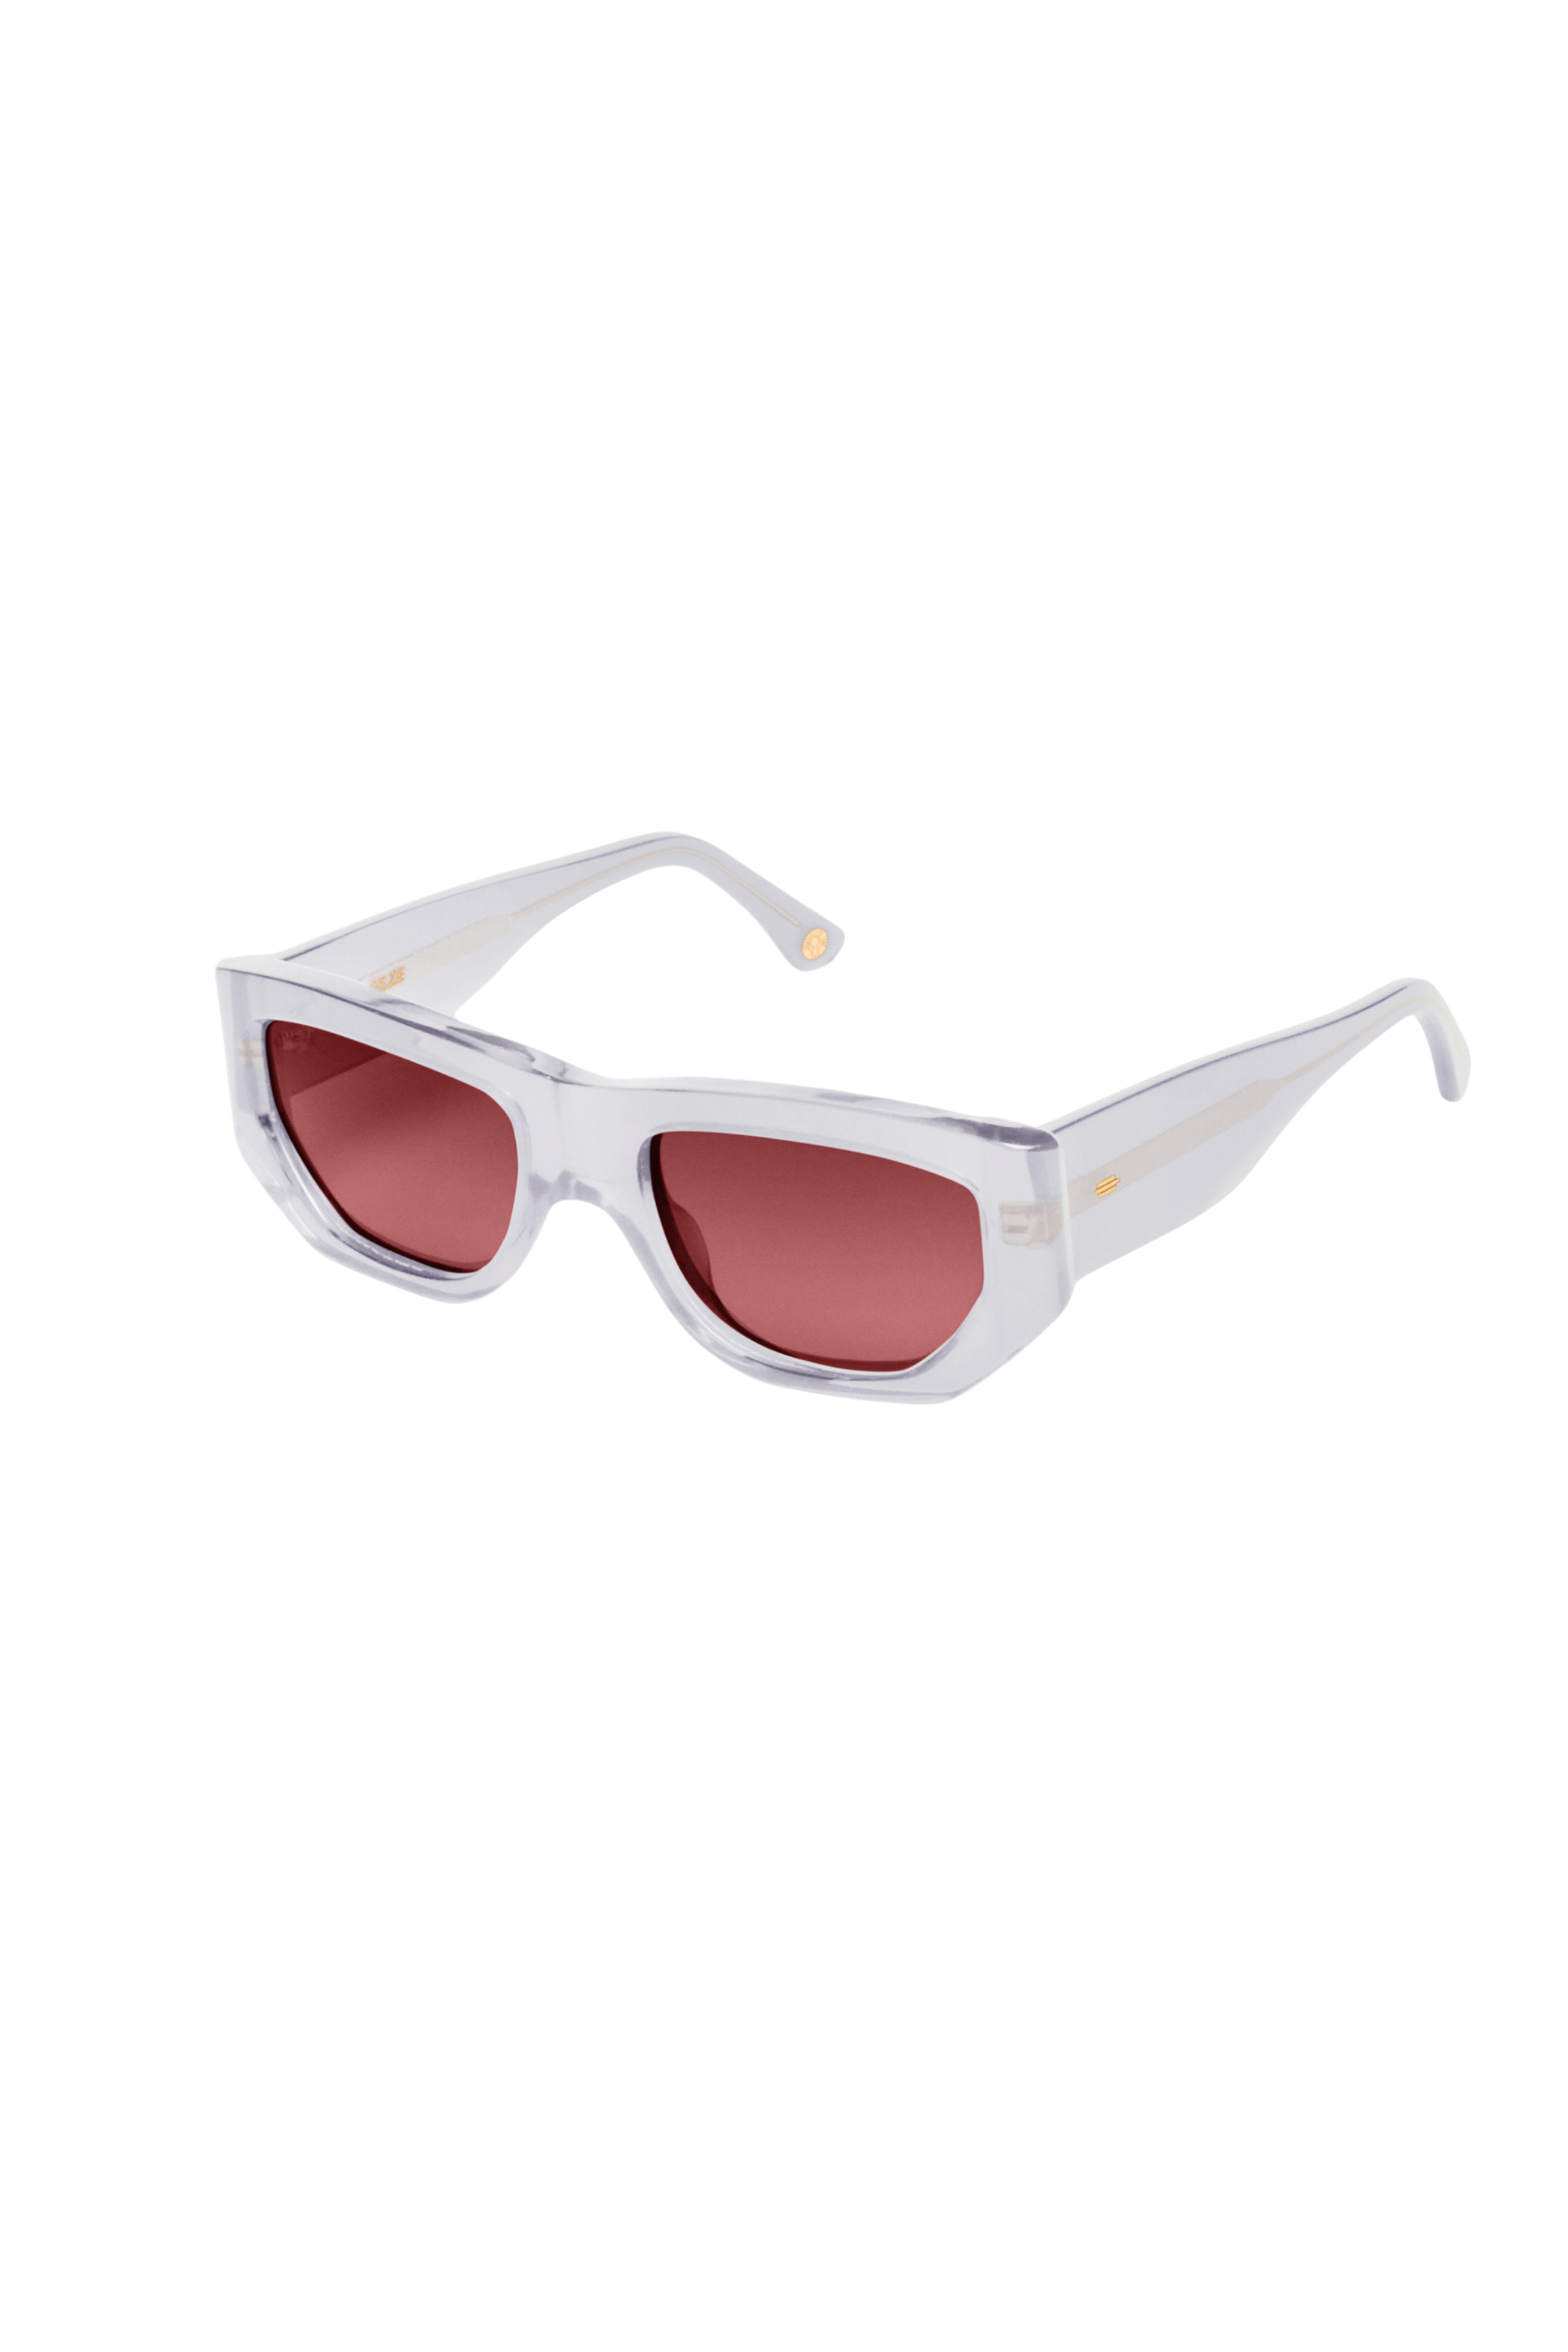 KIMEZE Concept 1 Red Lens Sunglasses